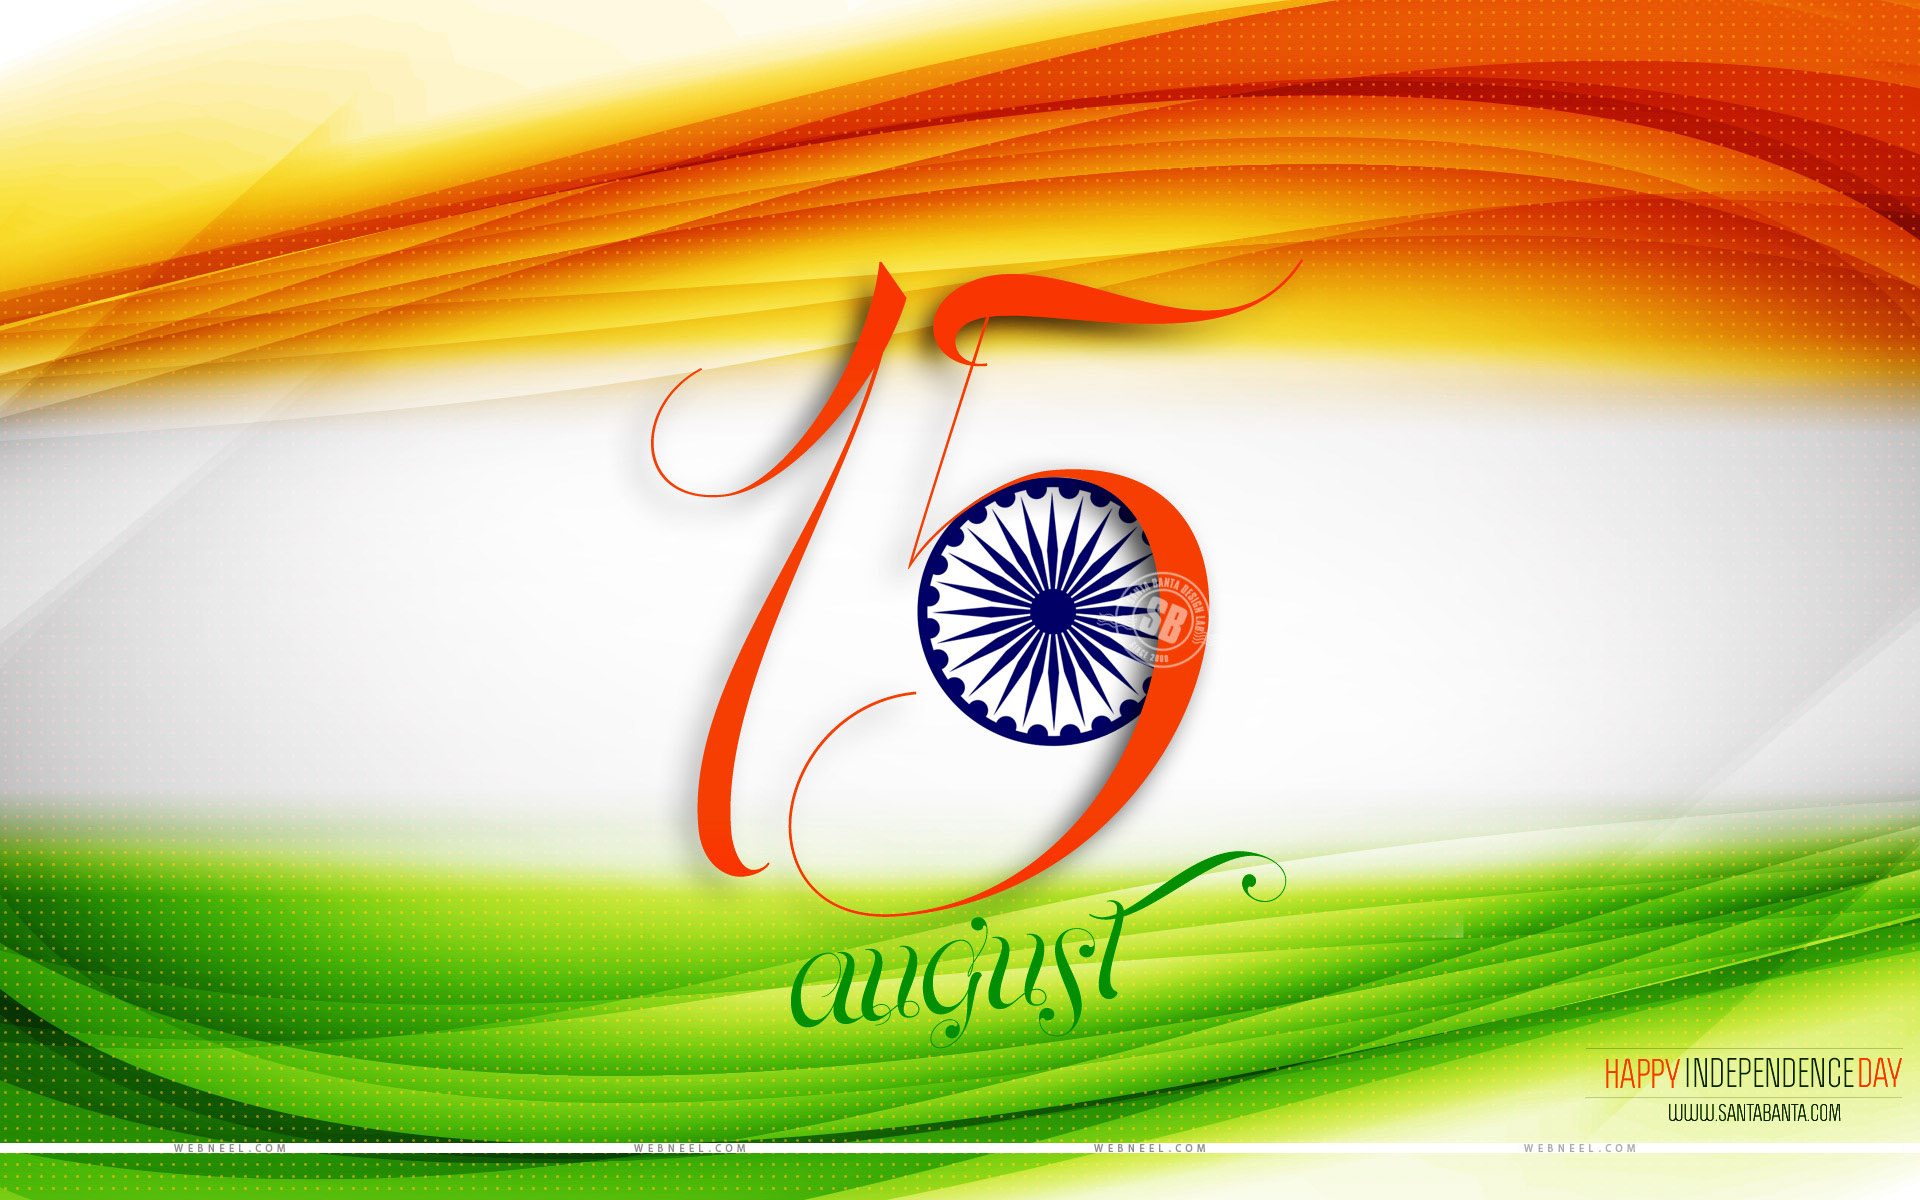 Independence day wallpaper for facebook mobile 2015 - Independence 